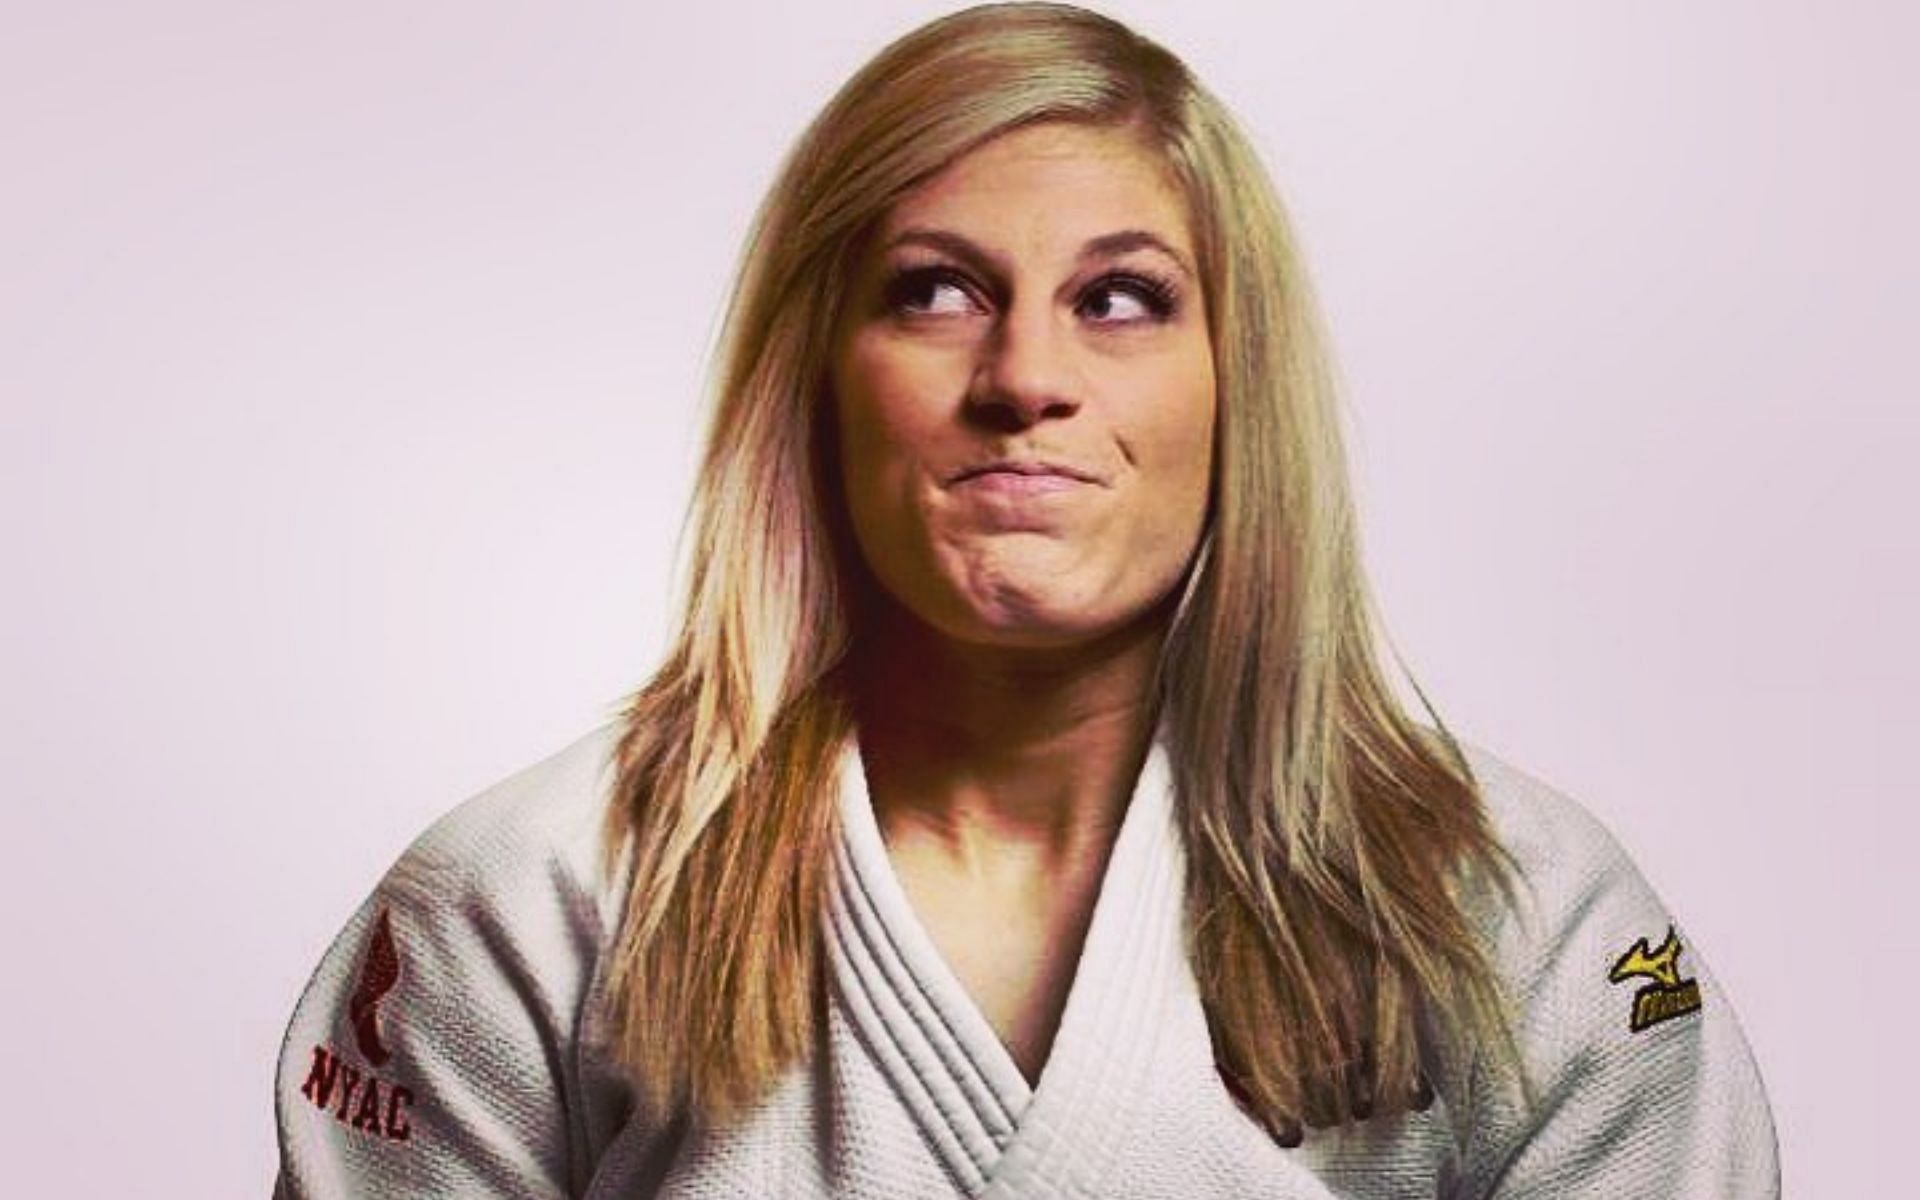 Kayla Harrison [Image Credits- @judokayla on Instagram]